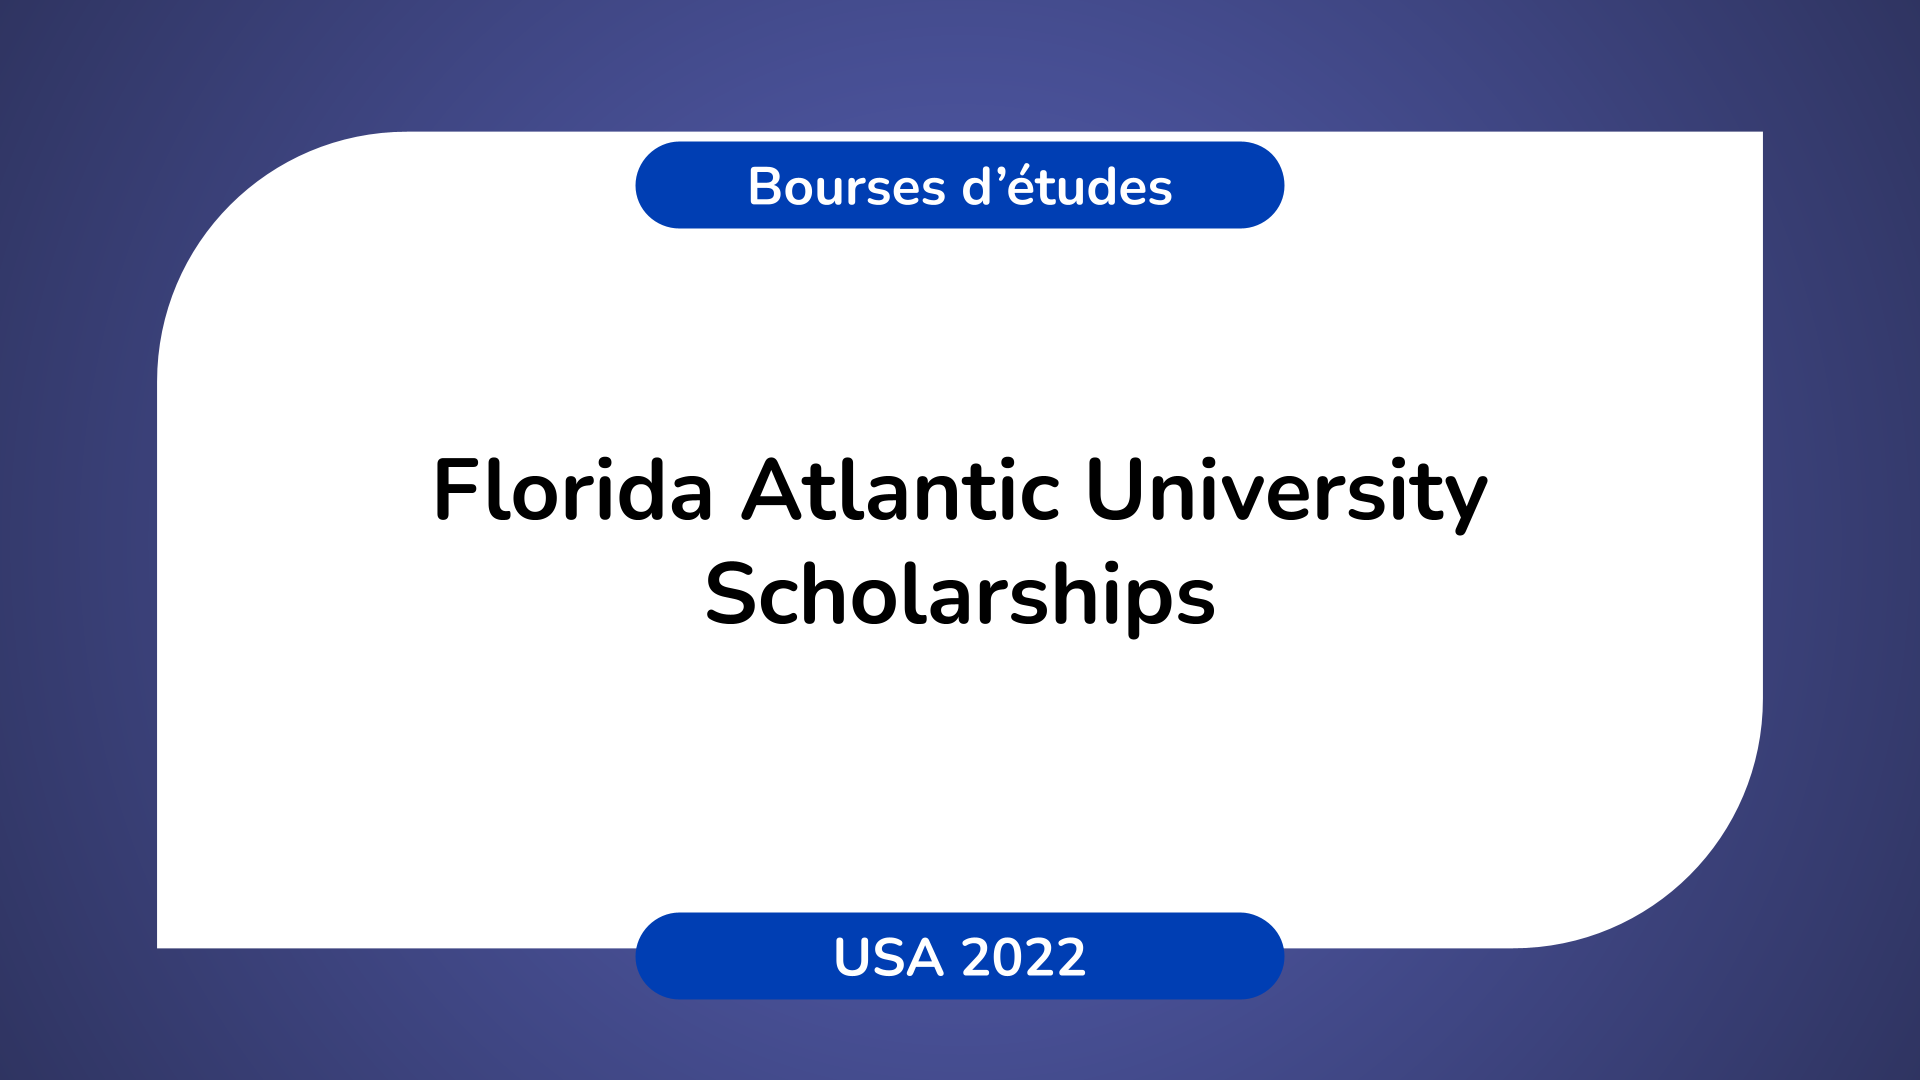 Florida Atlantic University Scholarships in the USA in 20222